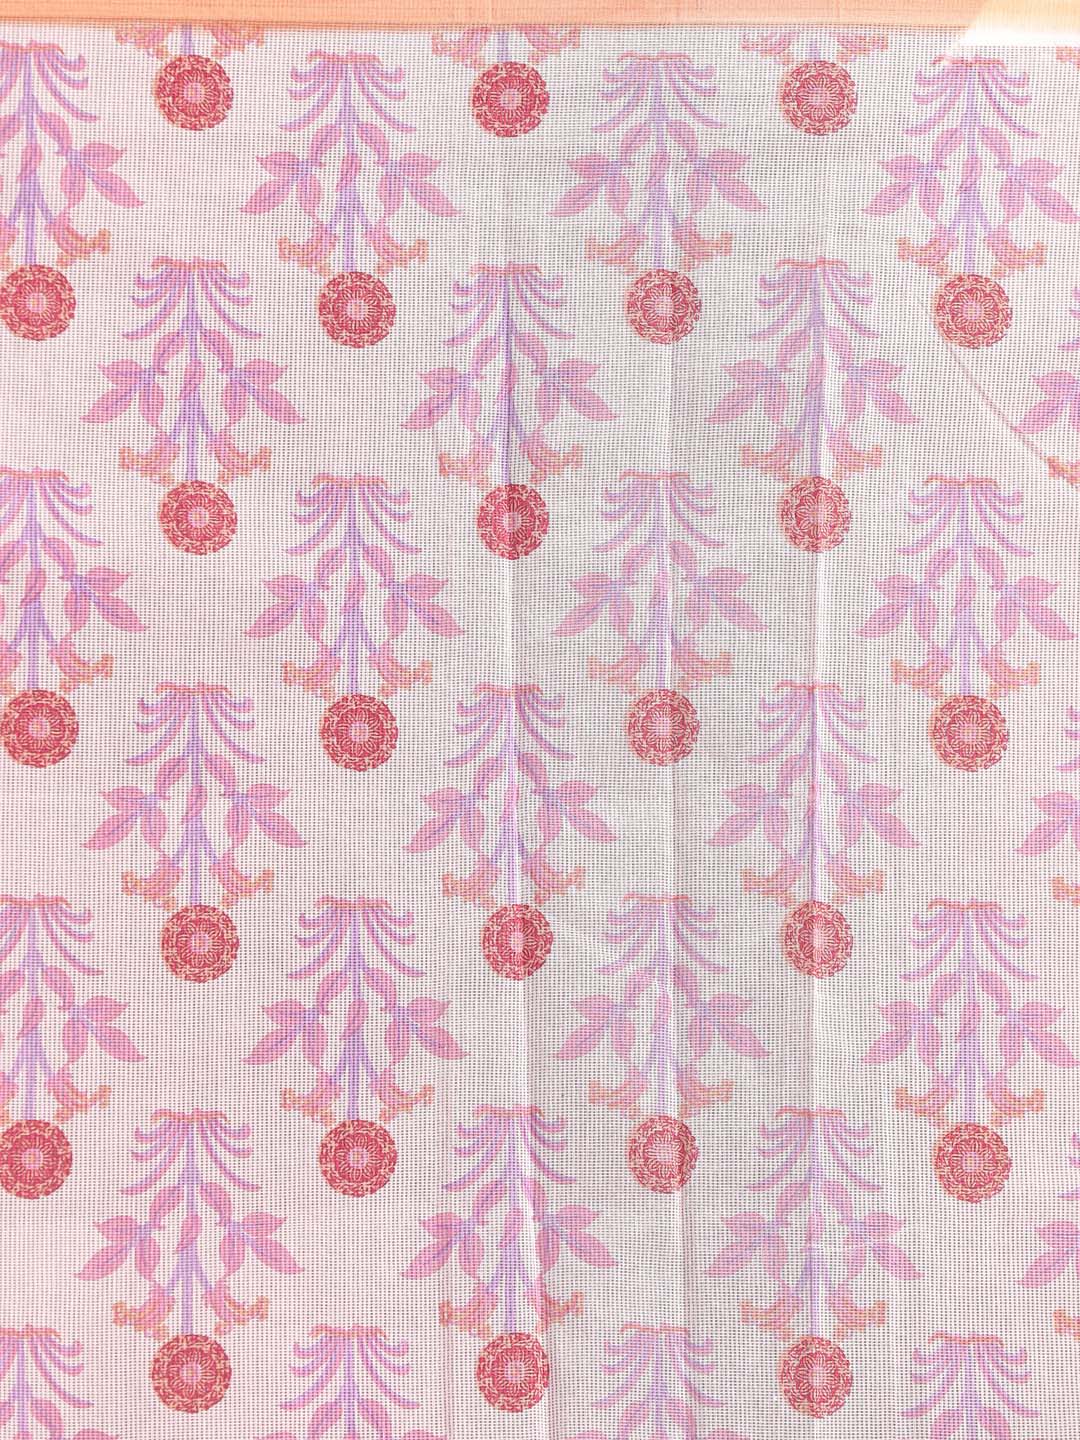 Indethnic Printed Super Net Saree in Lavender - Saree Detail View